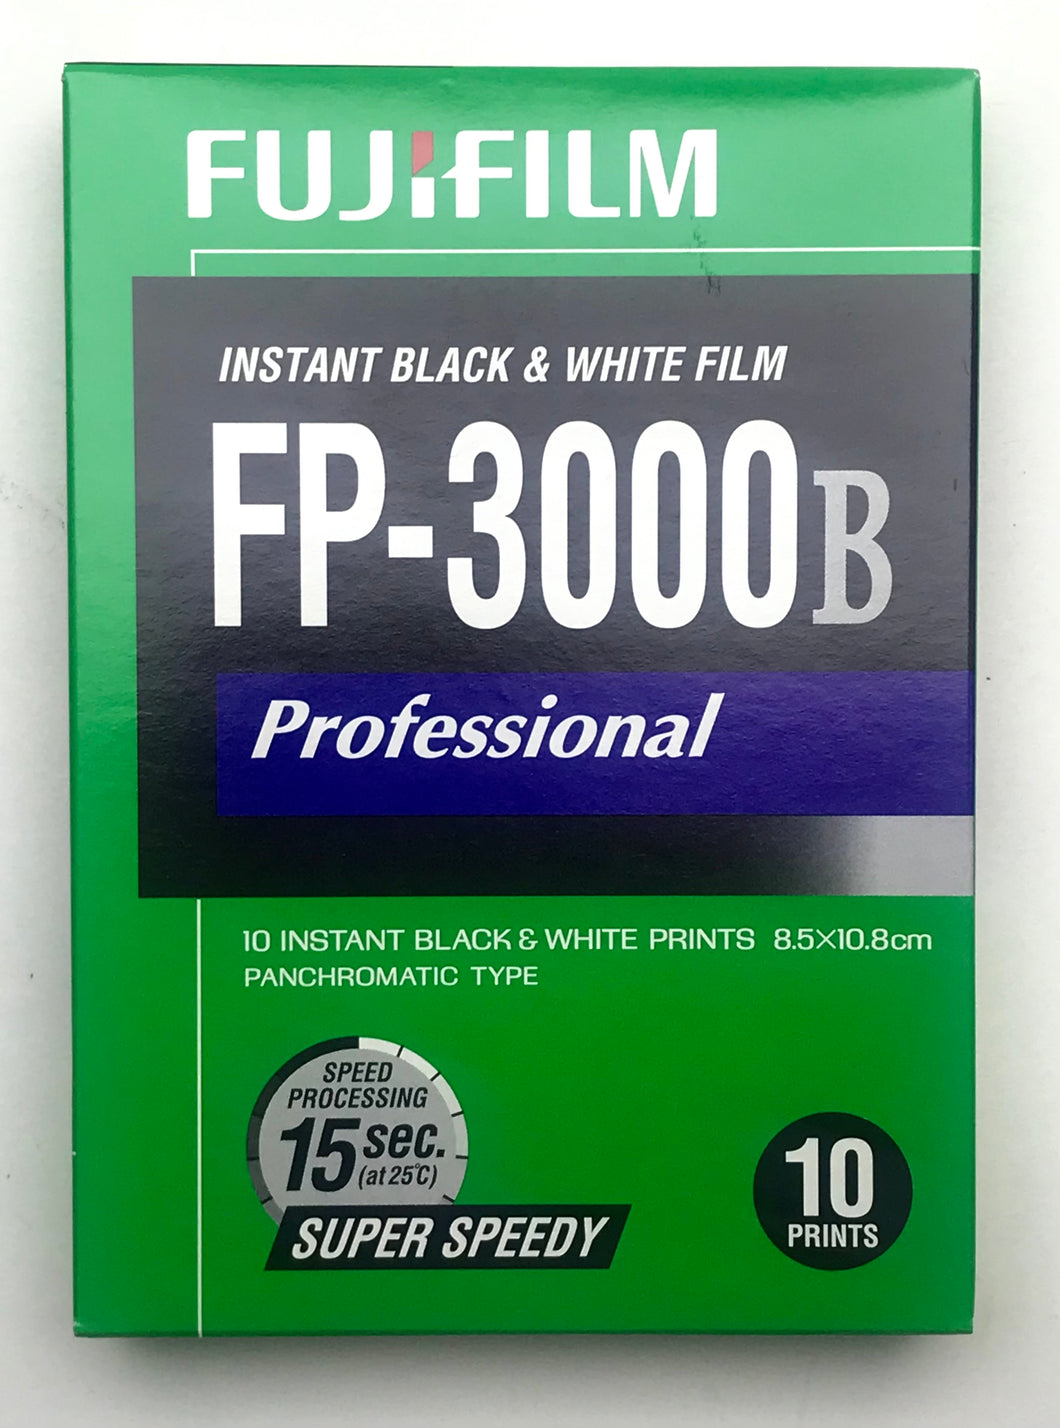 2015 Expired Fujifilm FP-3000B Instant Prints